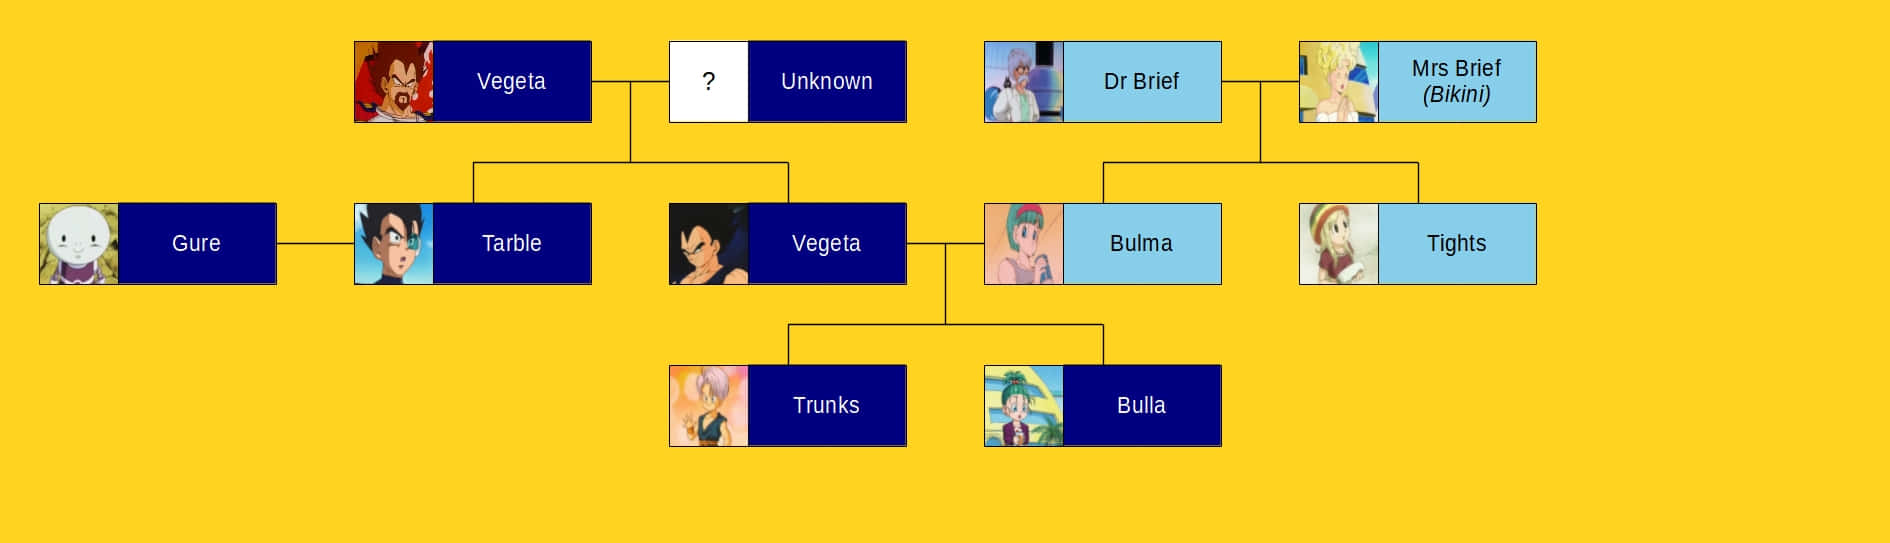 Vegeta, Bulma, and Trunks - The Royal Saiyan Family Wallpaper